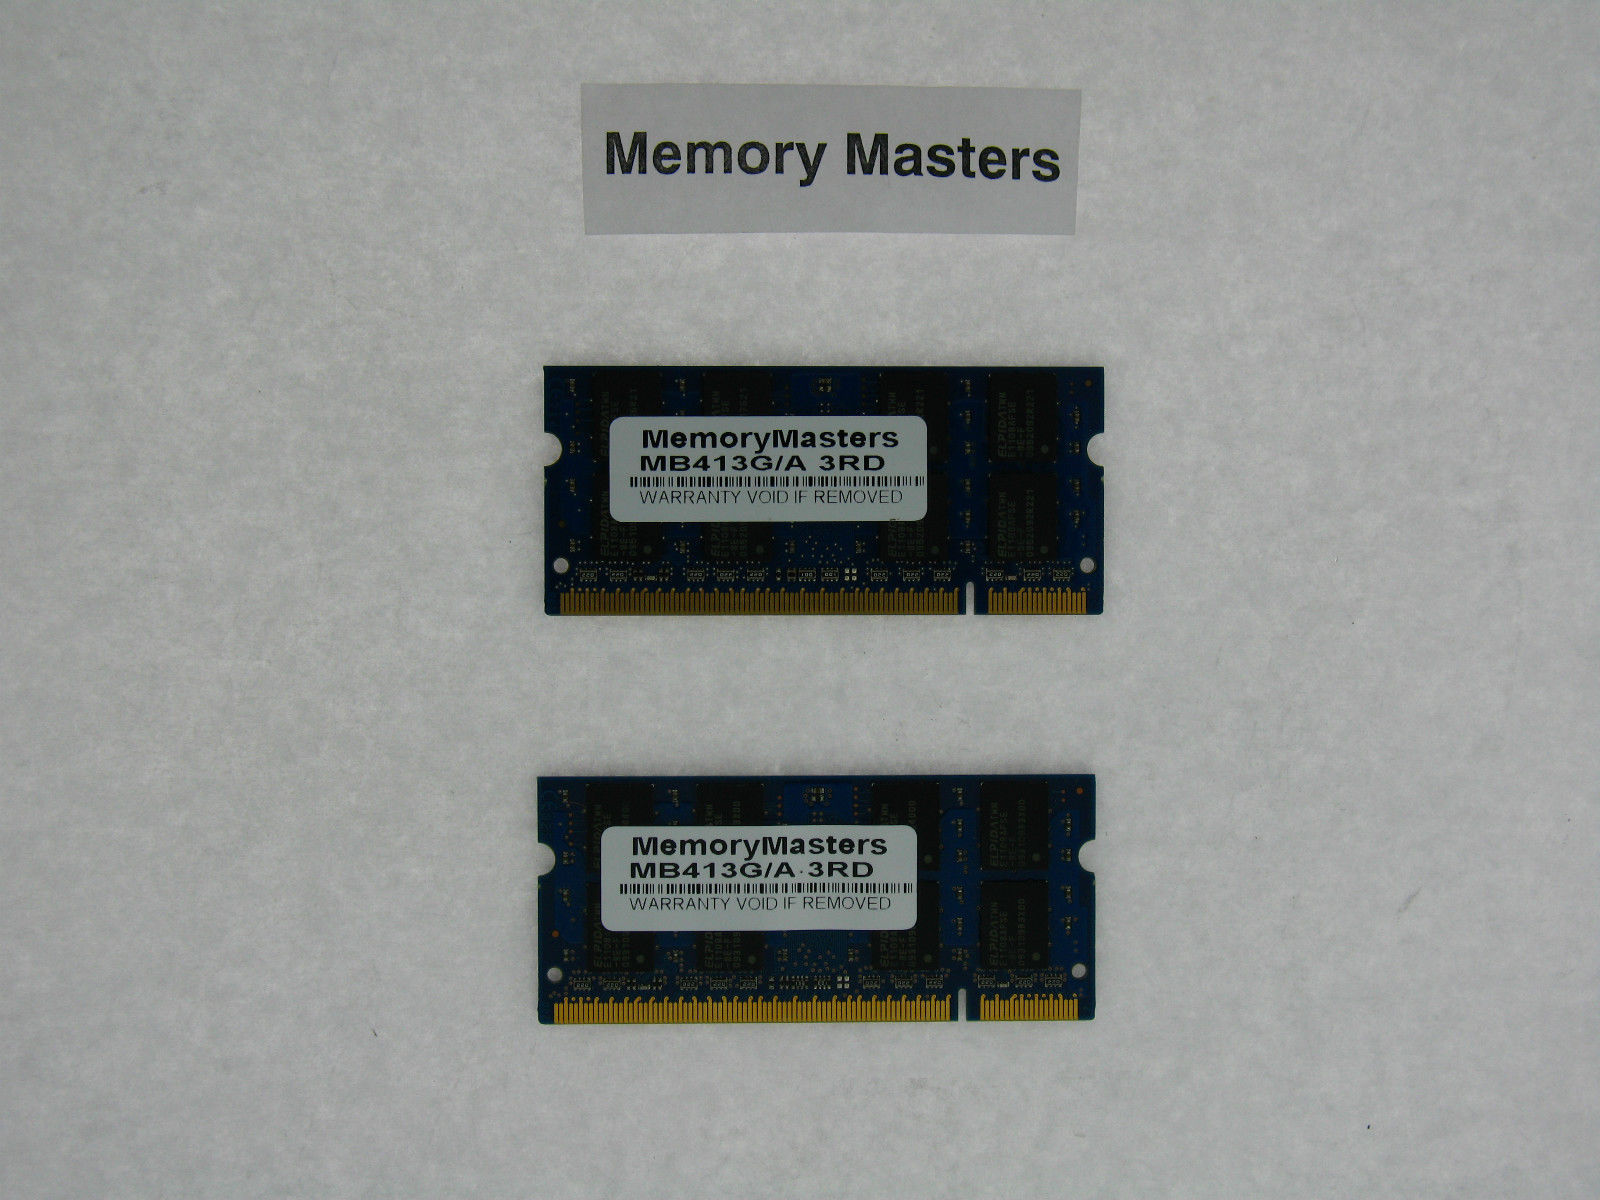 MB413G/A 4GB  (2X2GB) PC2-6400 800MHz DDR2 SDRAM SoDIMM APPLE iMAC - $39.54